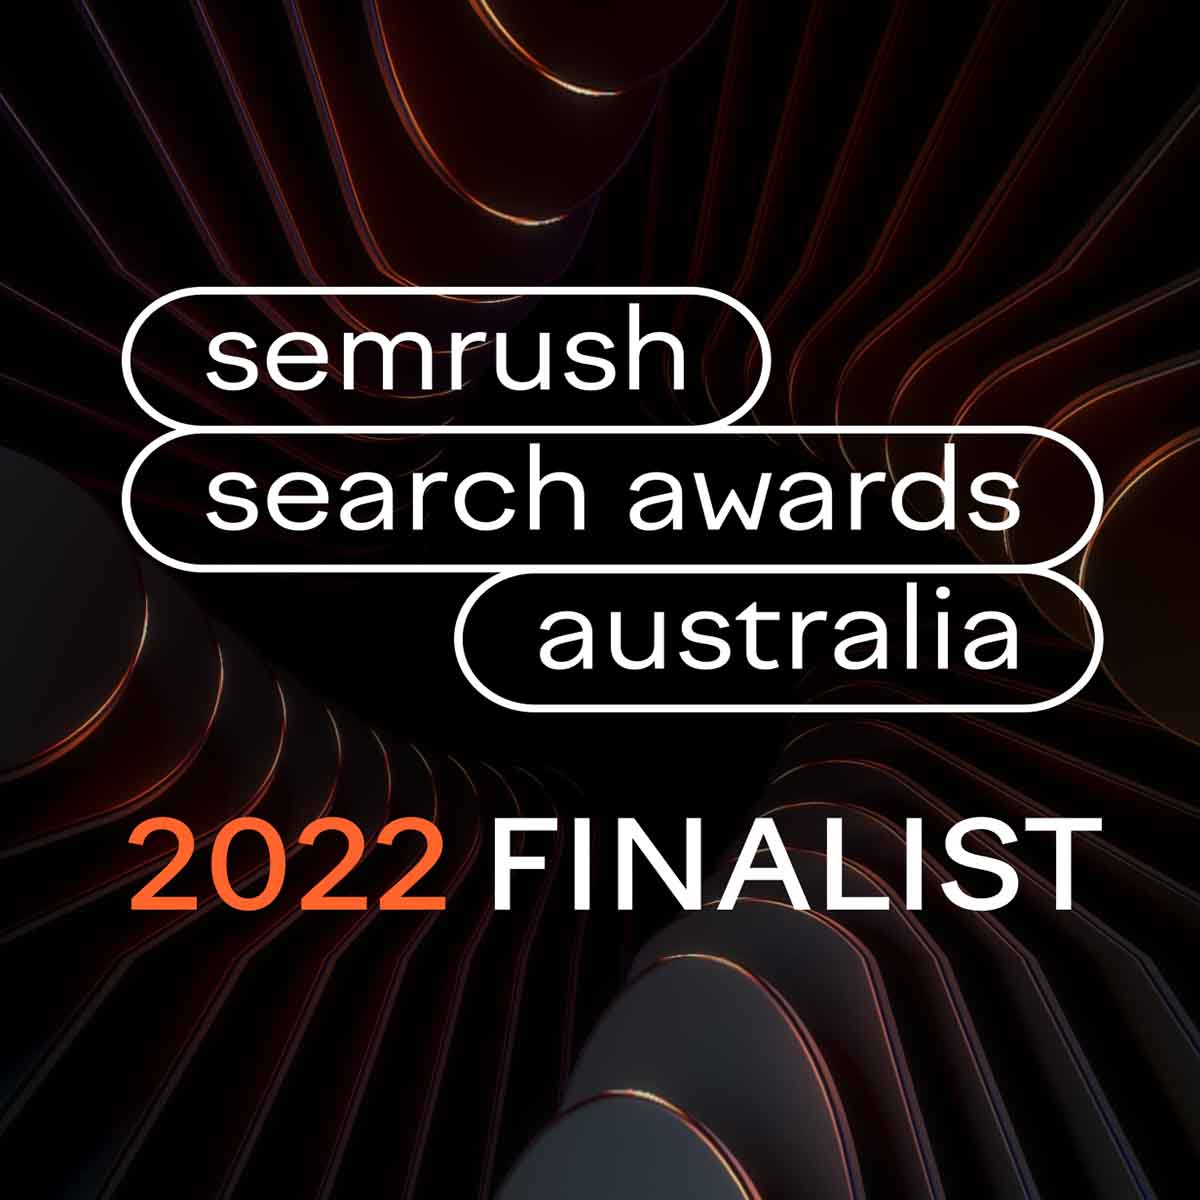 semrush search awards australia living online award-winning marketing agency